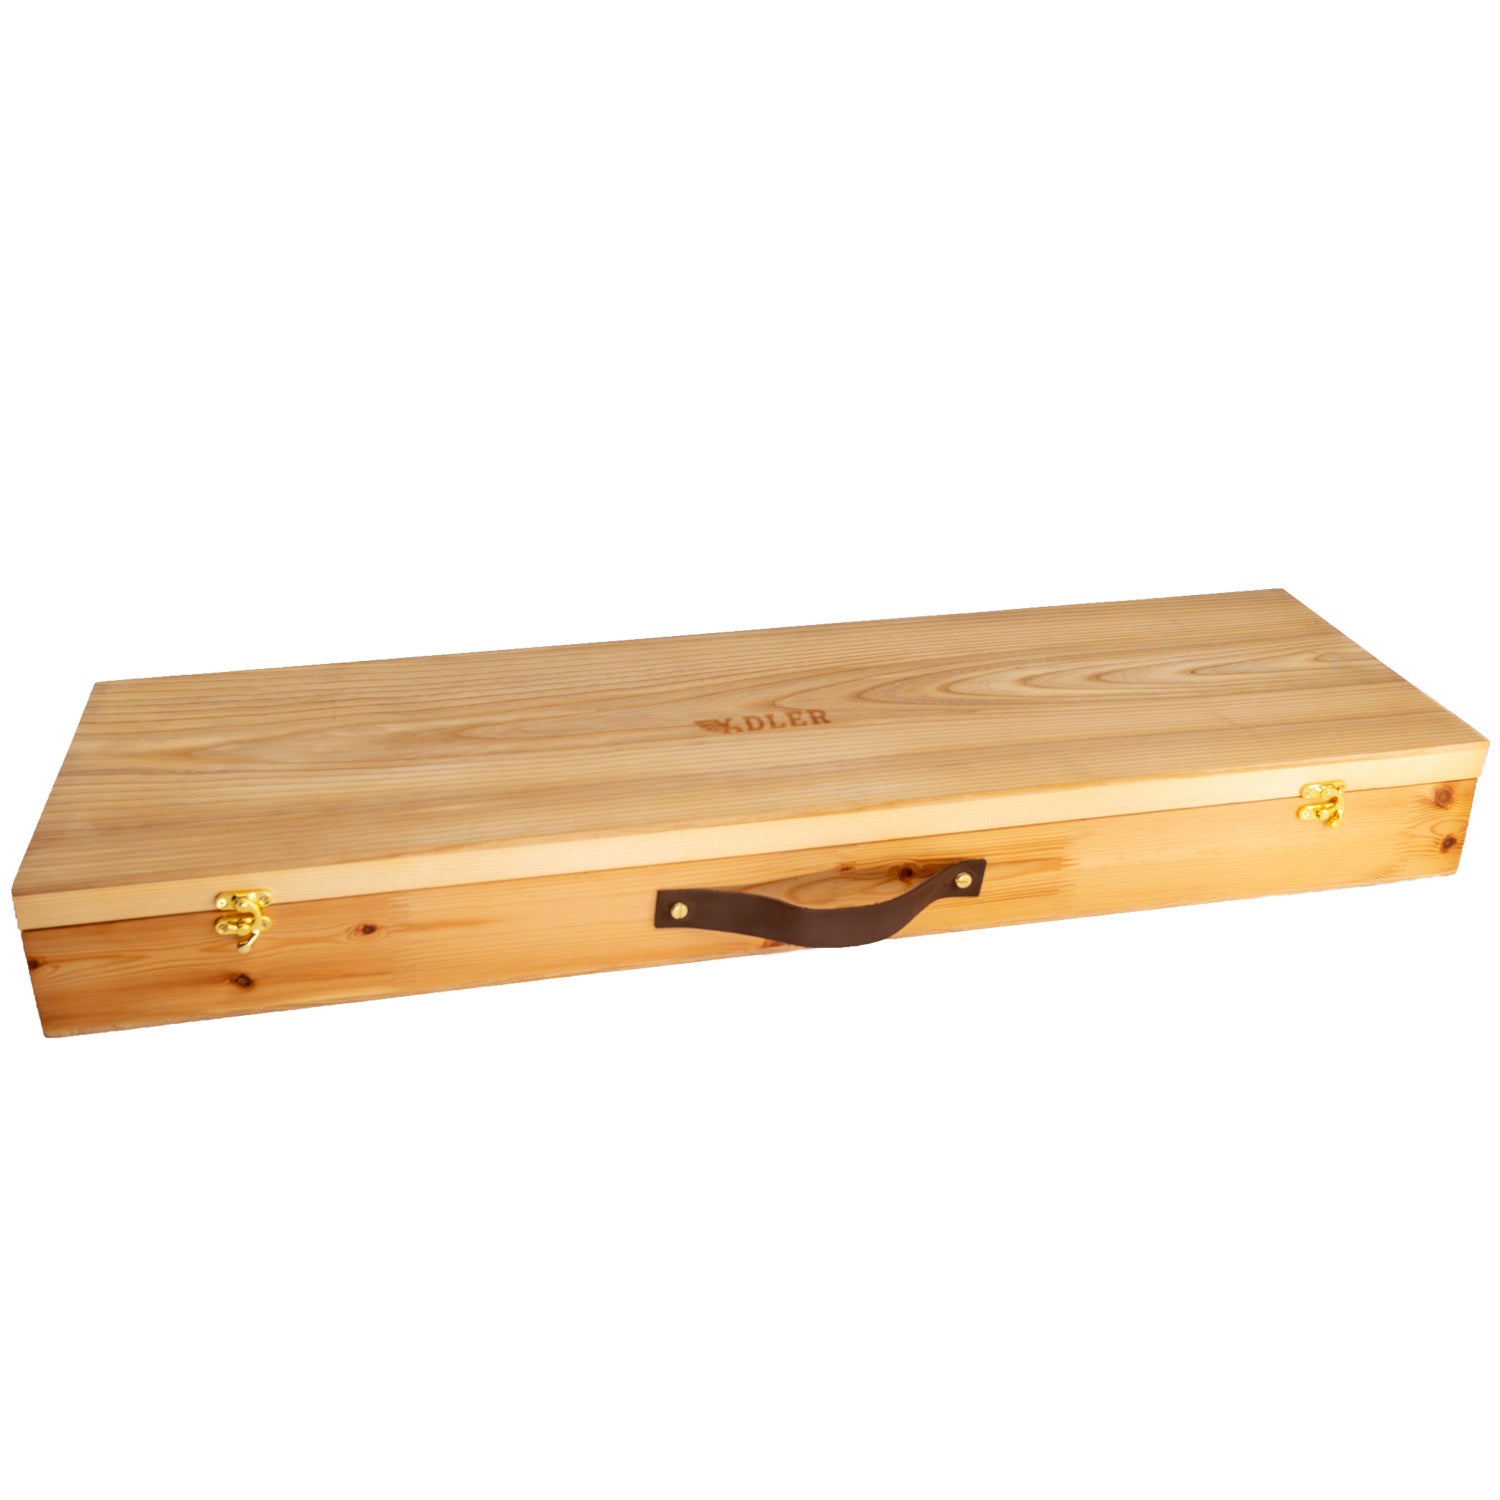 Axe Gift Set (incl. Wooden Box)